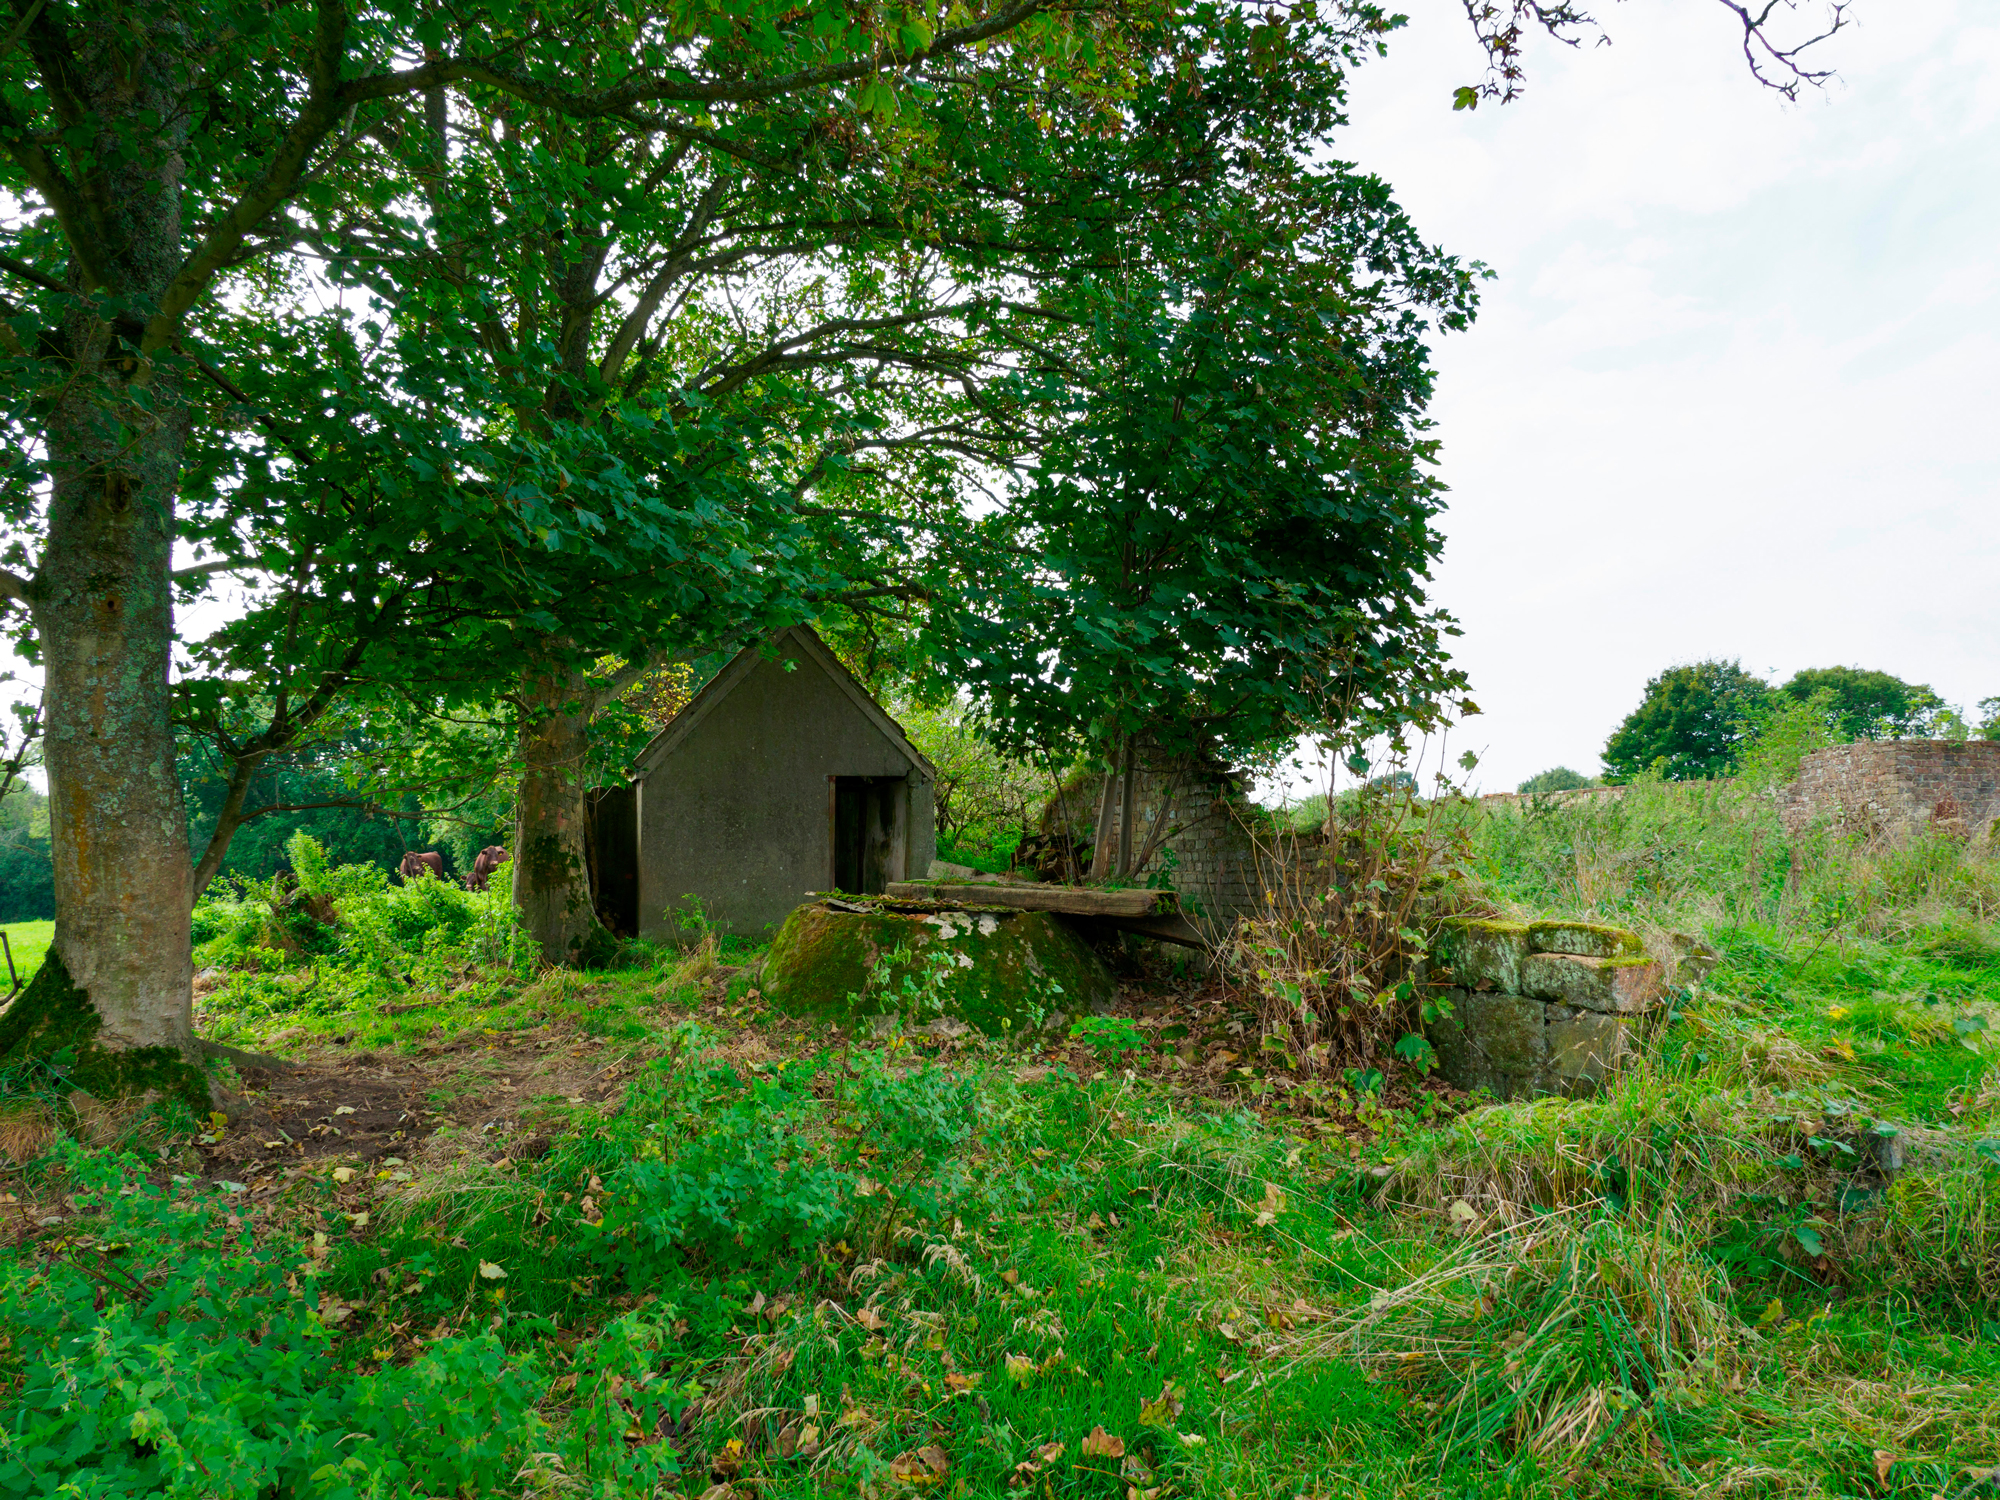 Rural plot in Kent with rundown structure